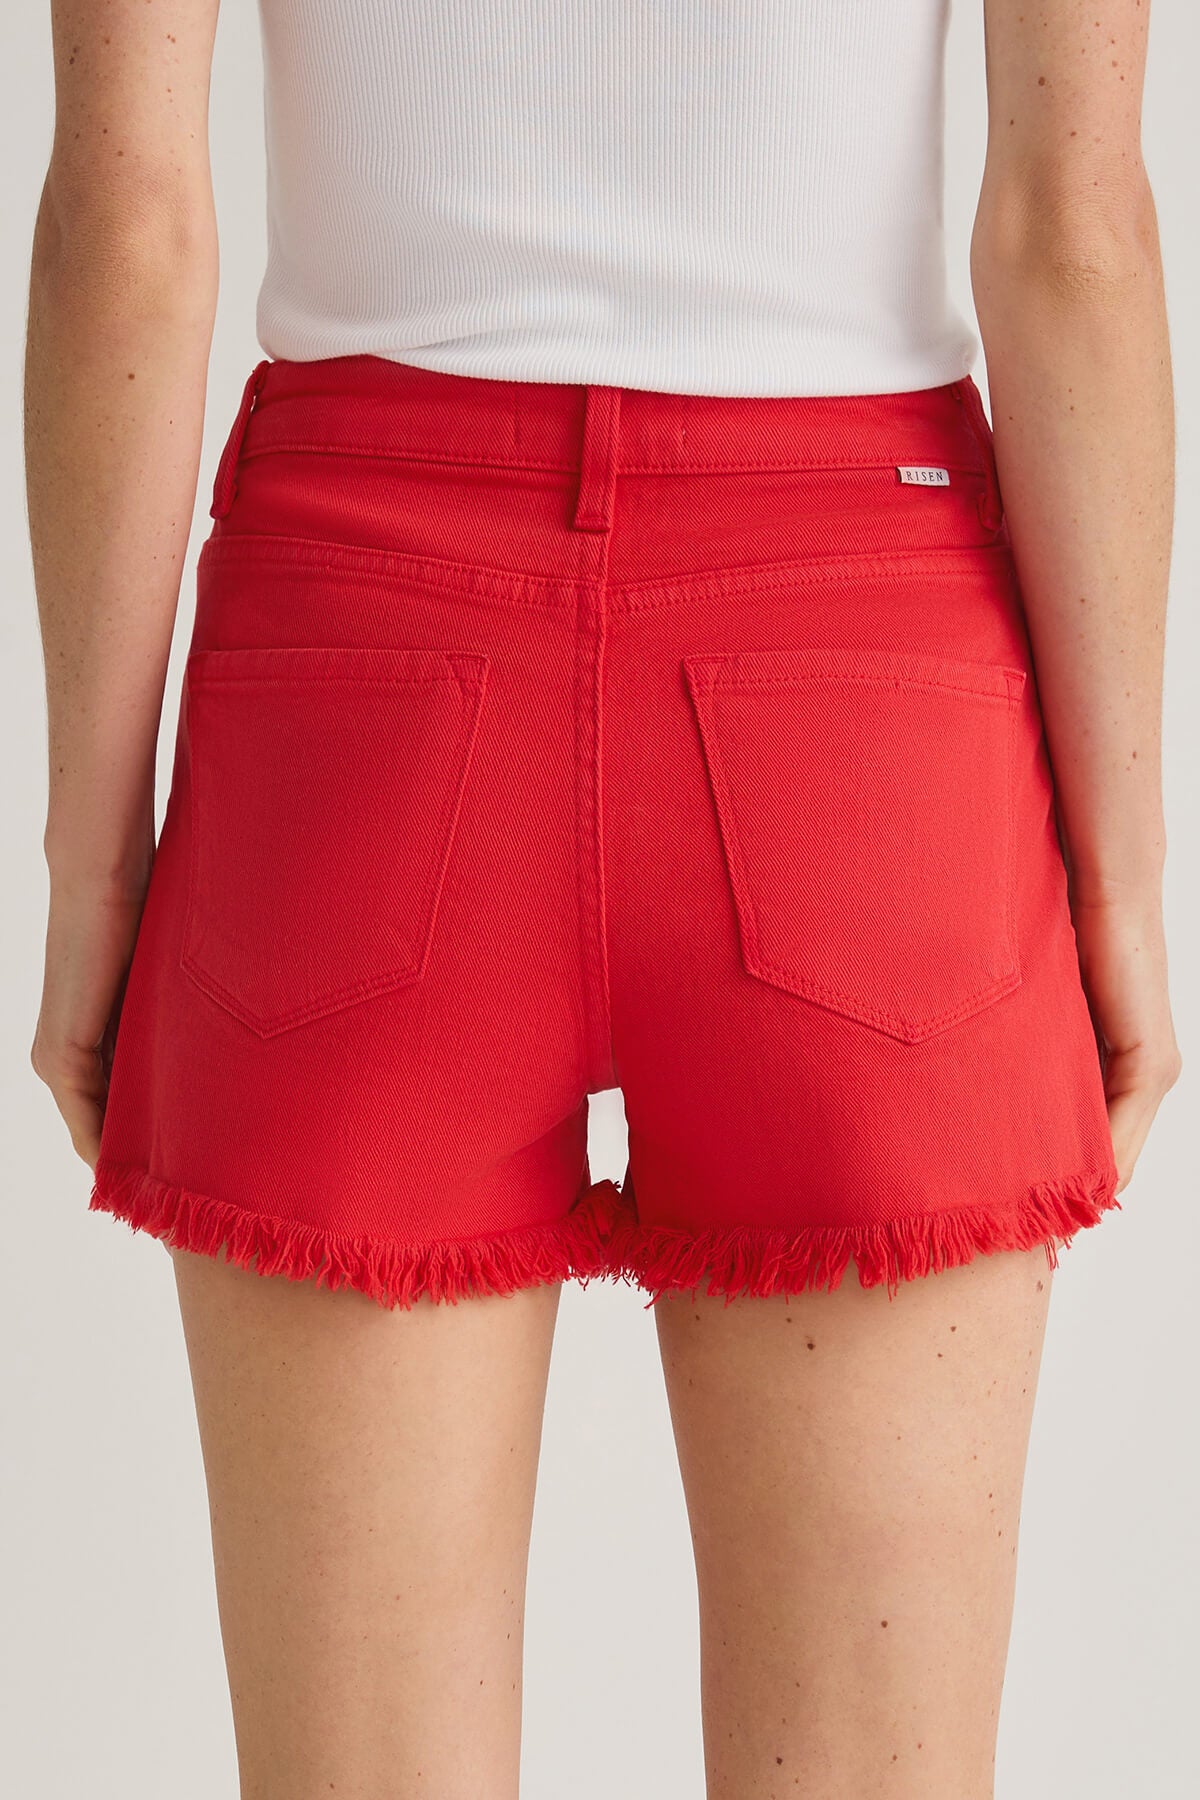 Risen Red Cutoff Shorts